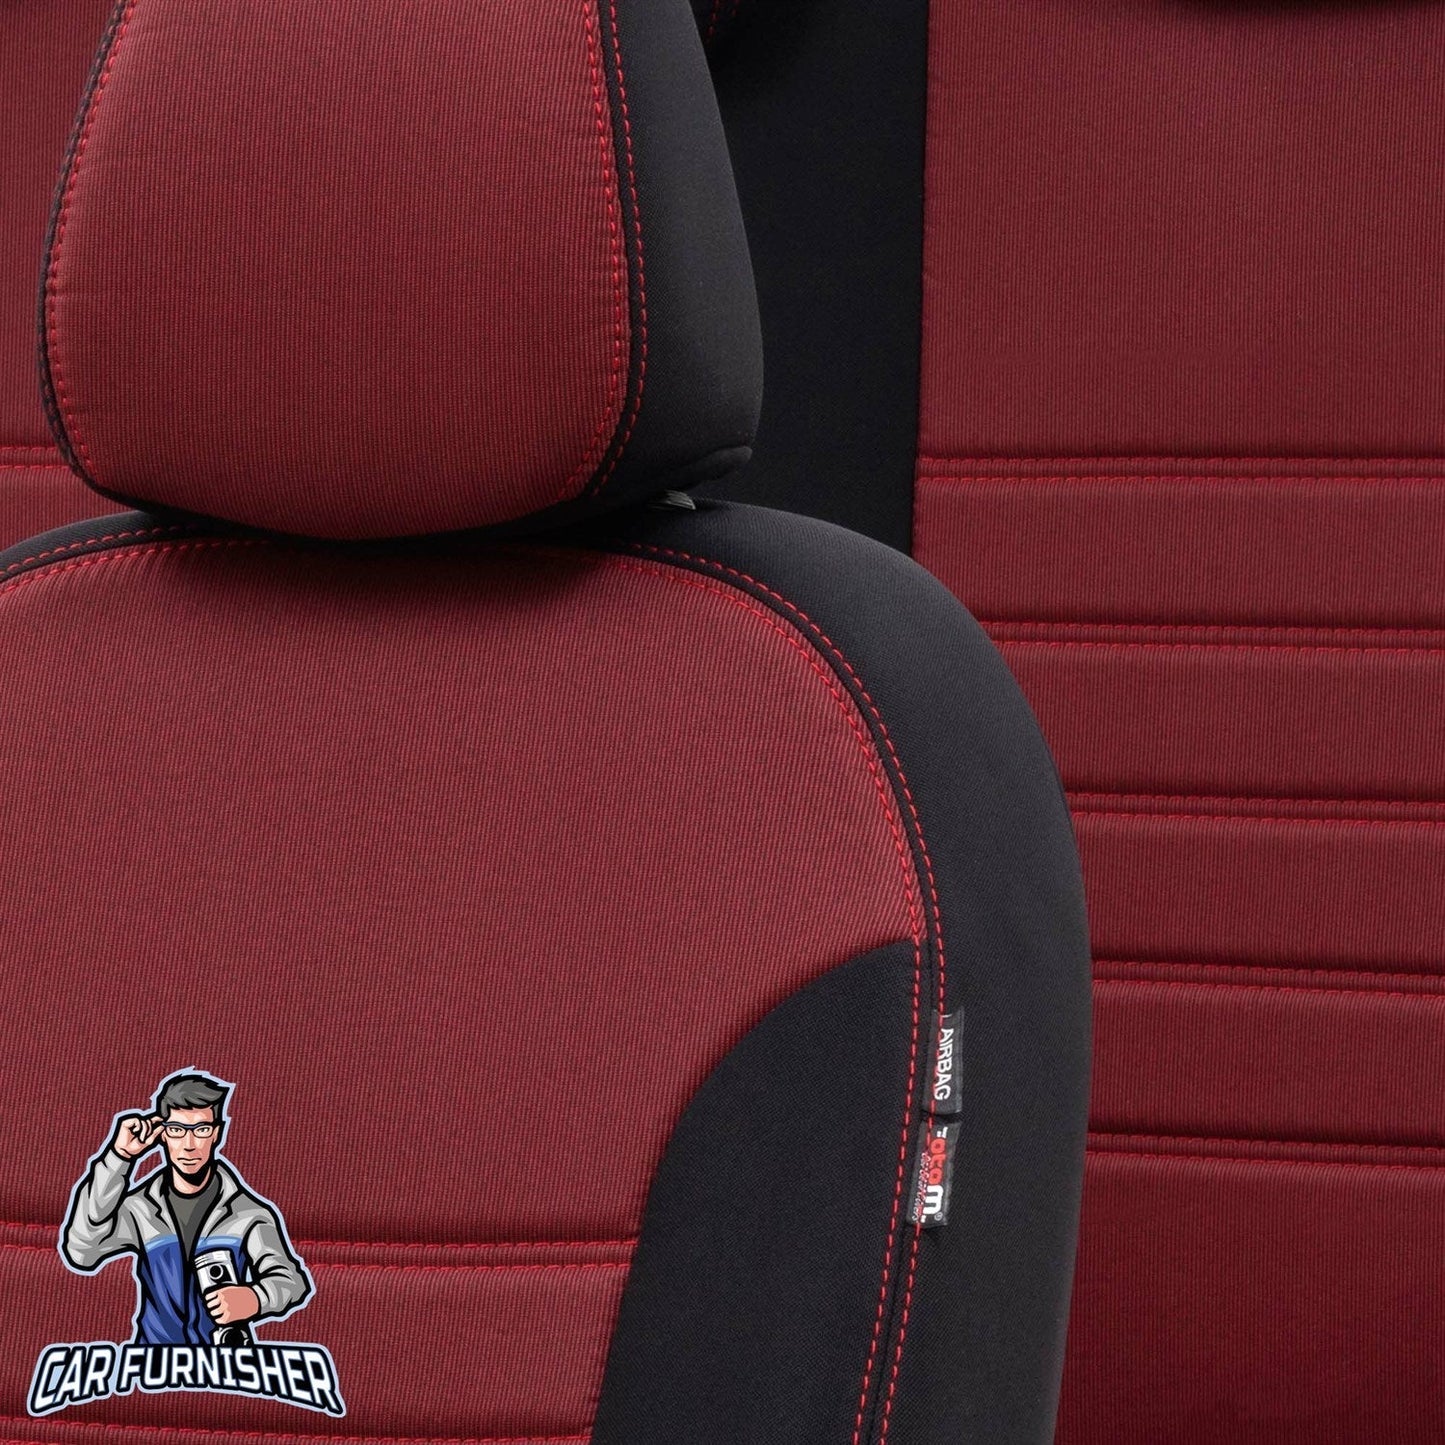 Volkswagen Caravelle Seat Cover Original Jacquard Design Red Jacquard Fabric